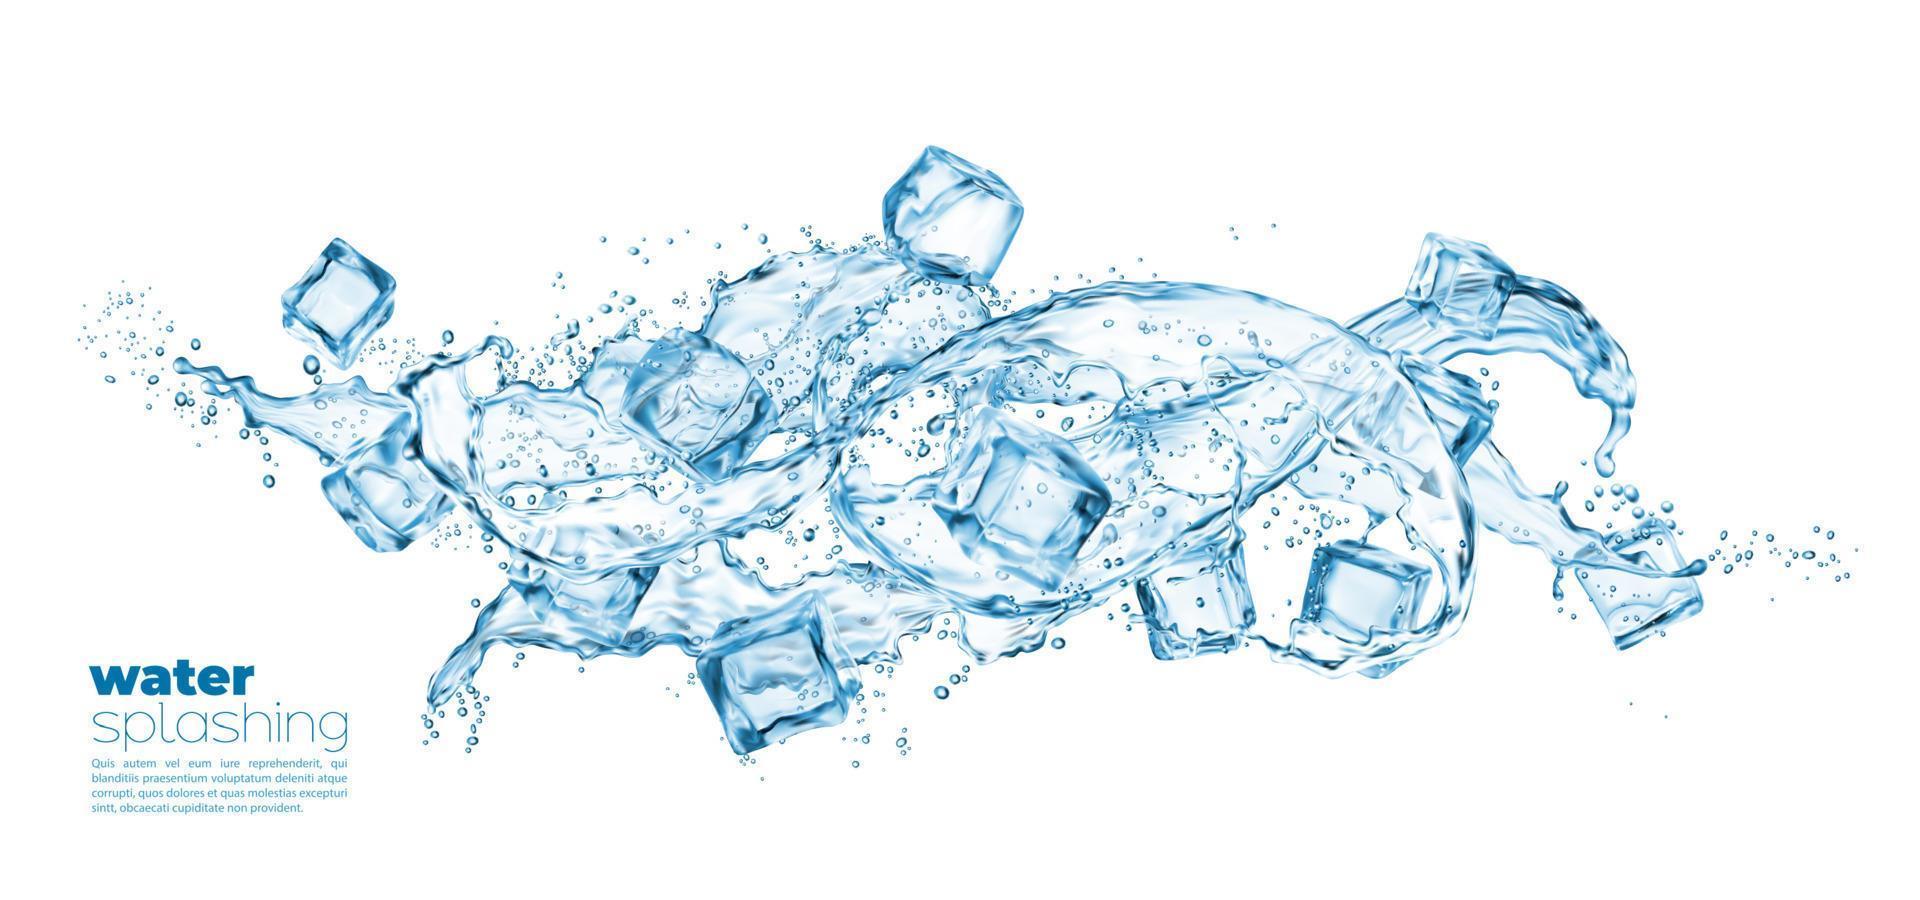 azul água respingo e gelo cubos congeladas movimento vetor